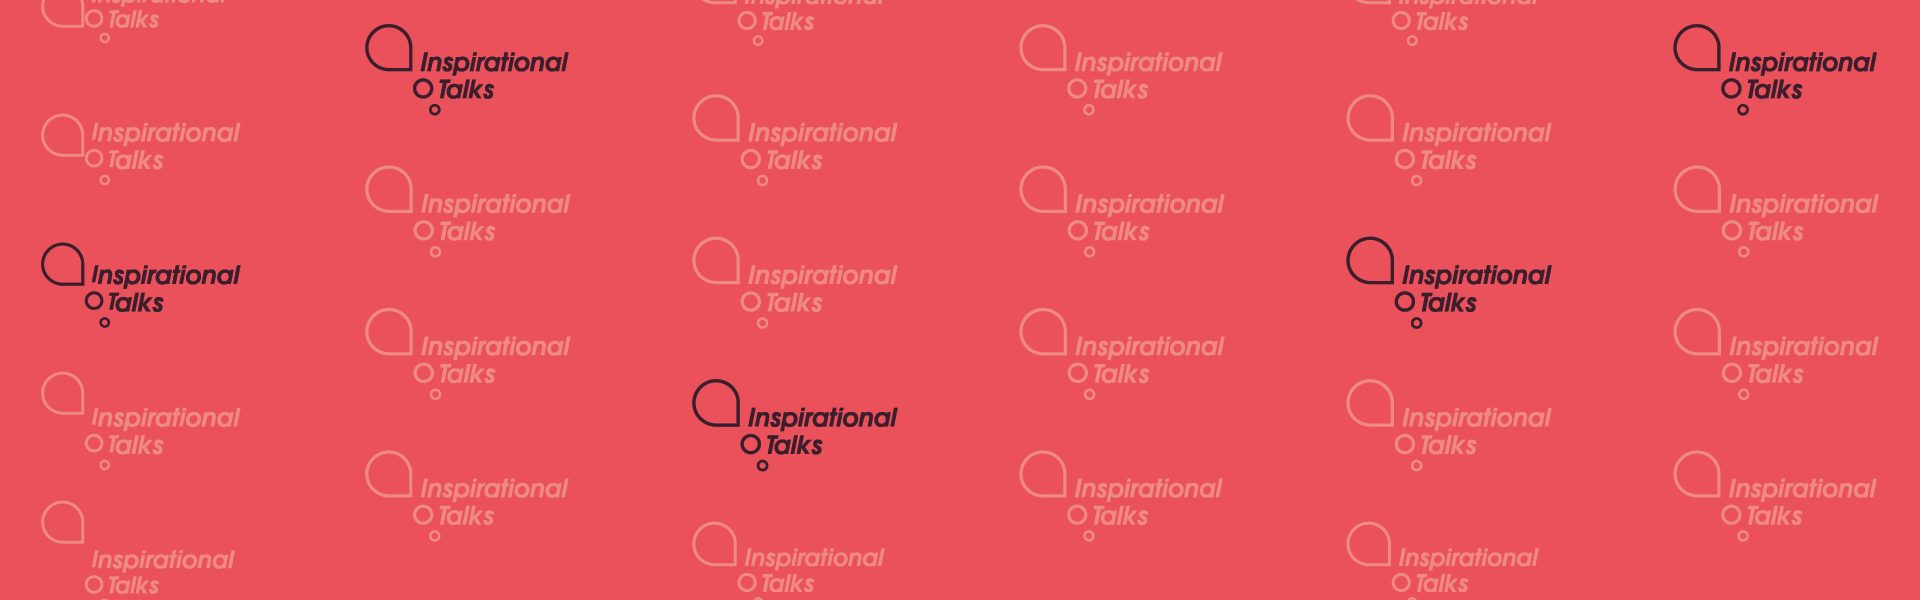 Inspirational Talks logo over en rødlig baggrund